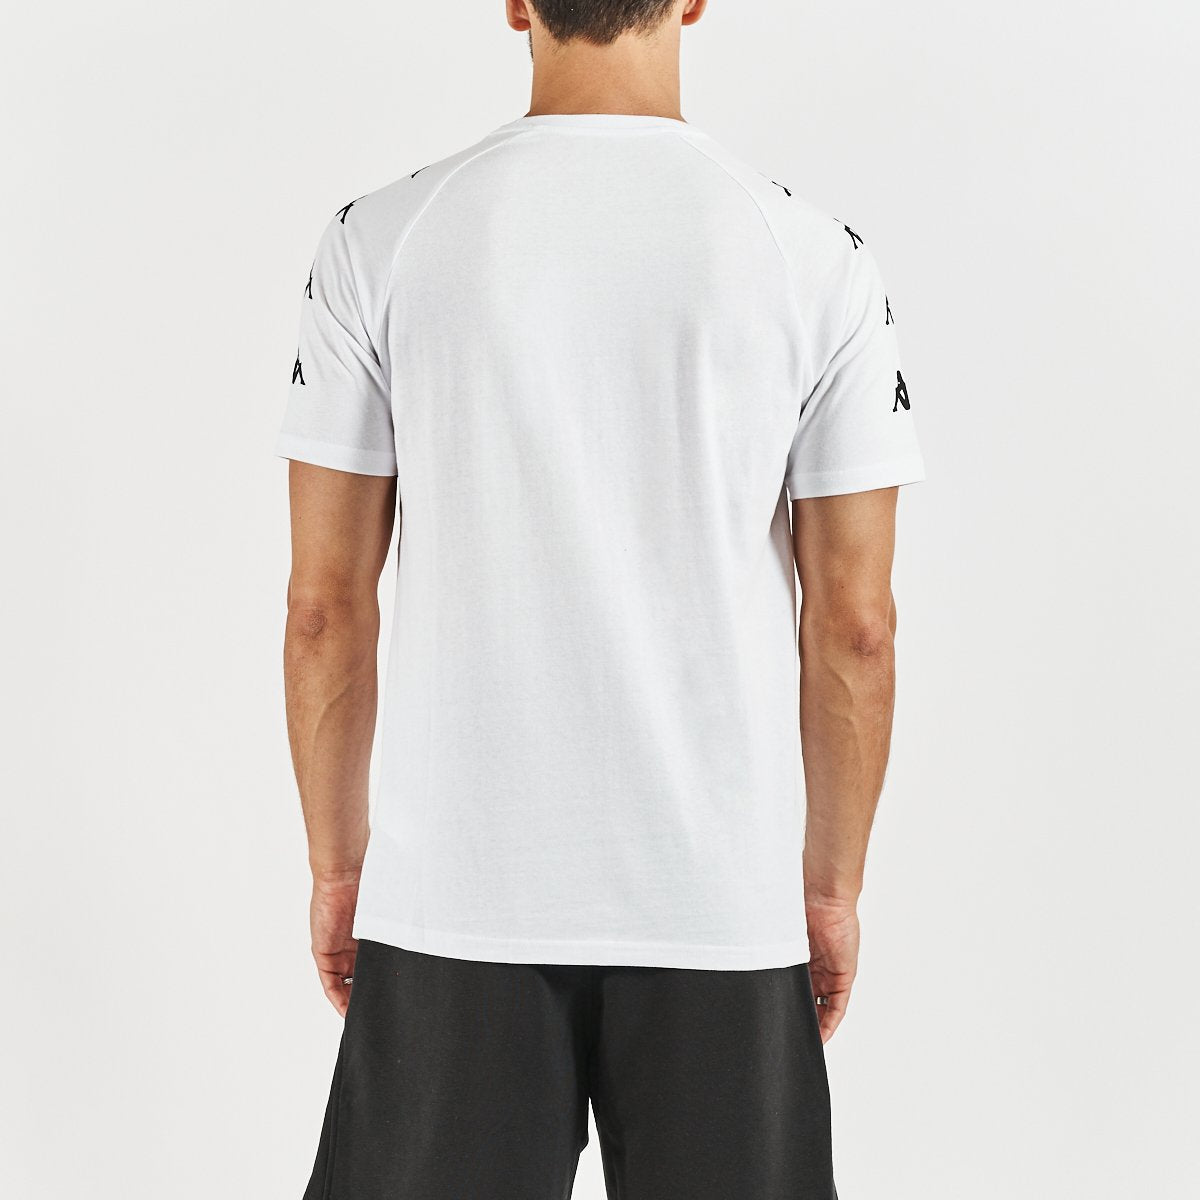 Camiseta Klake blanco hombre - Imagen 2